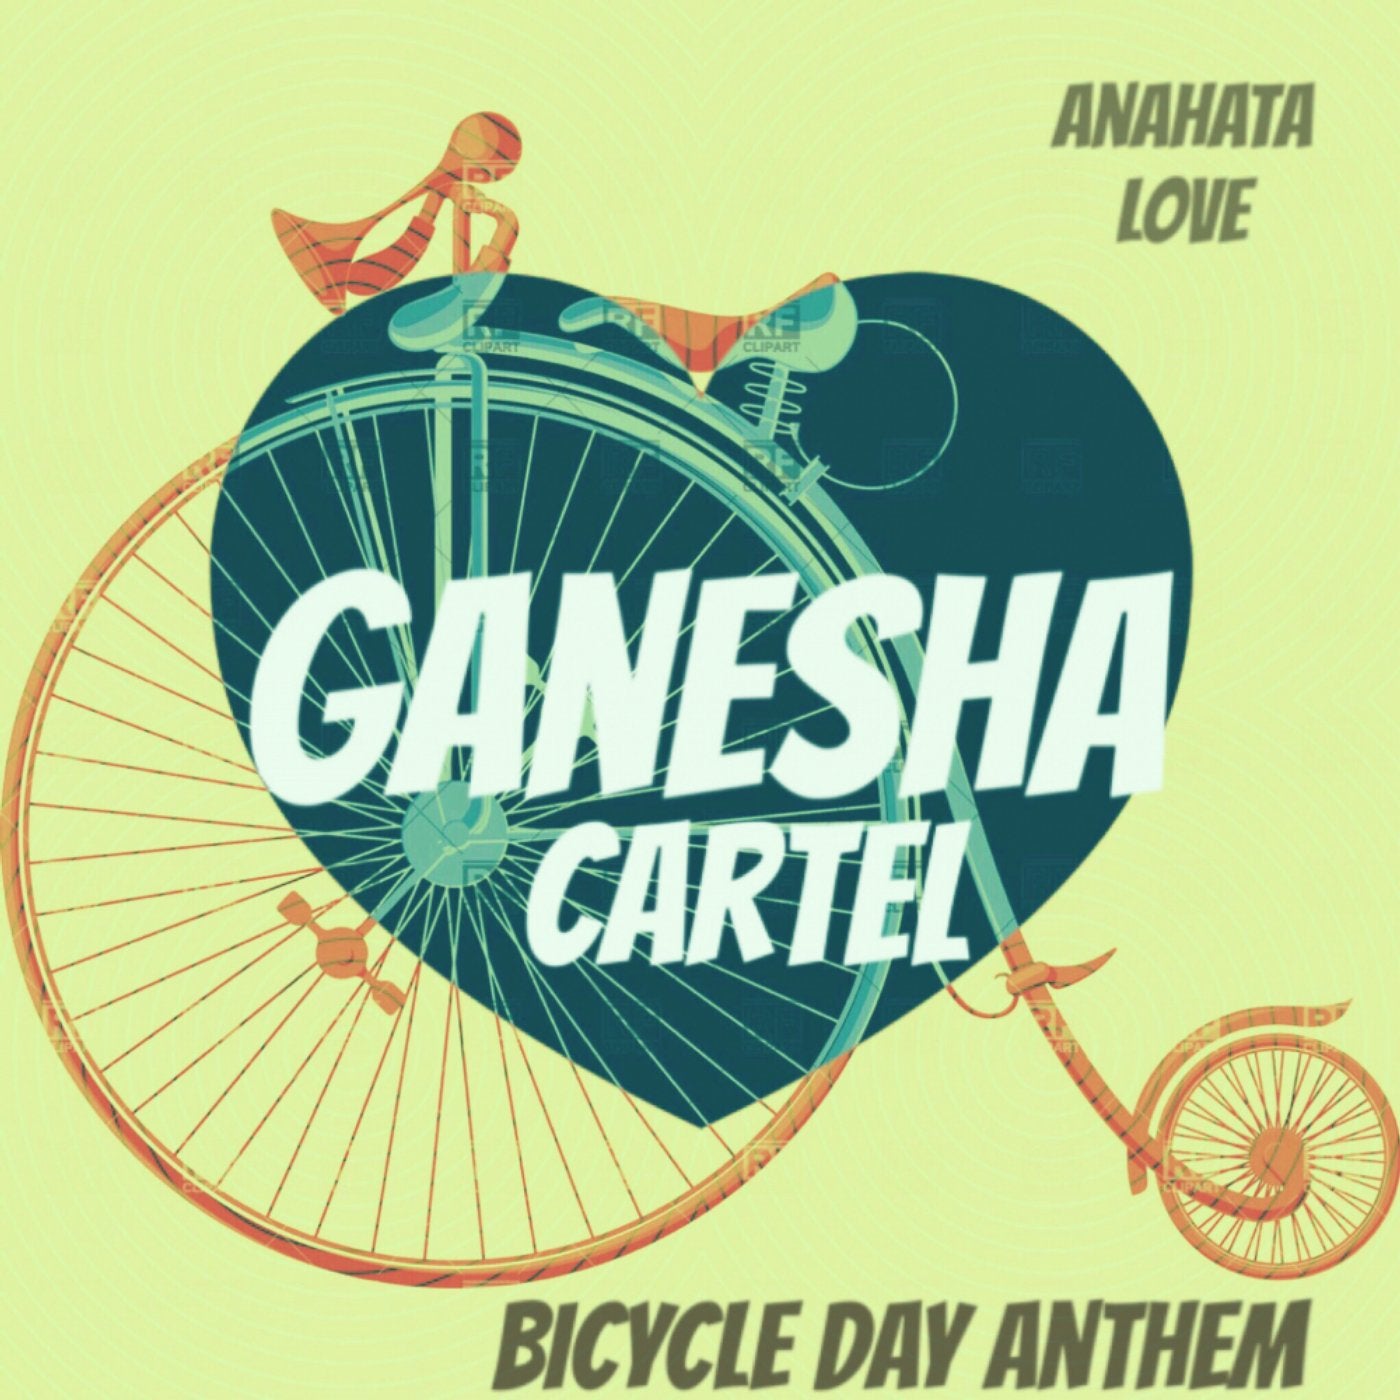 Bicycle Day Anthem